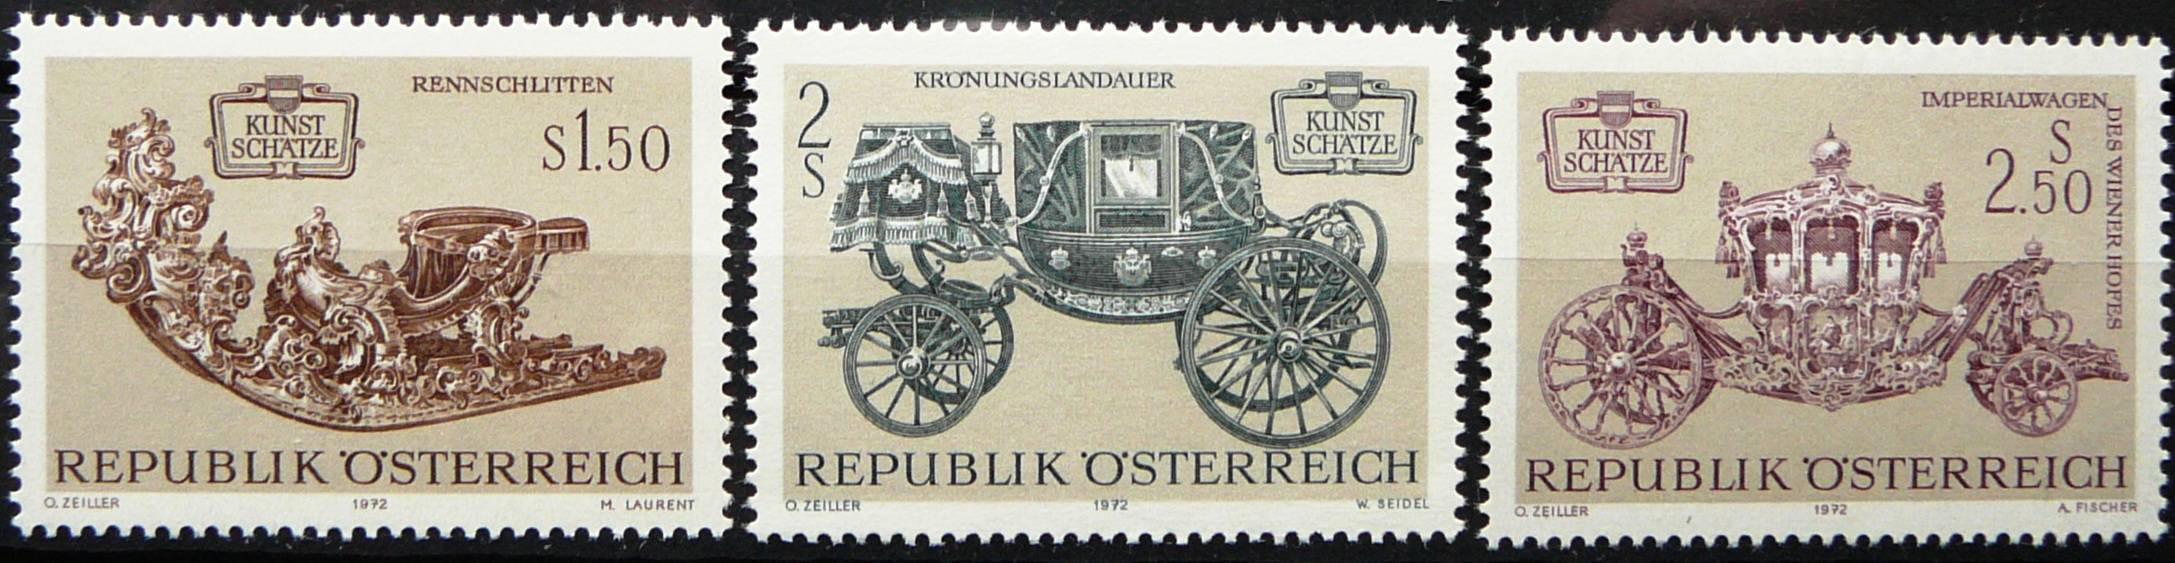 Republik osterreich марки